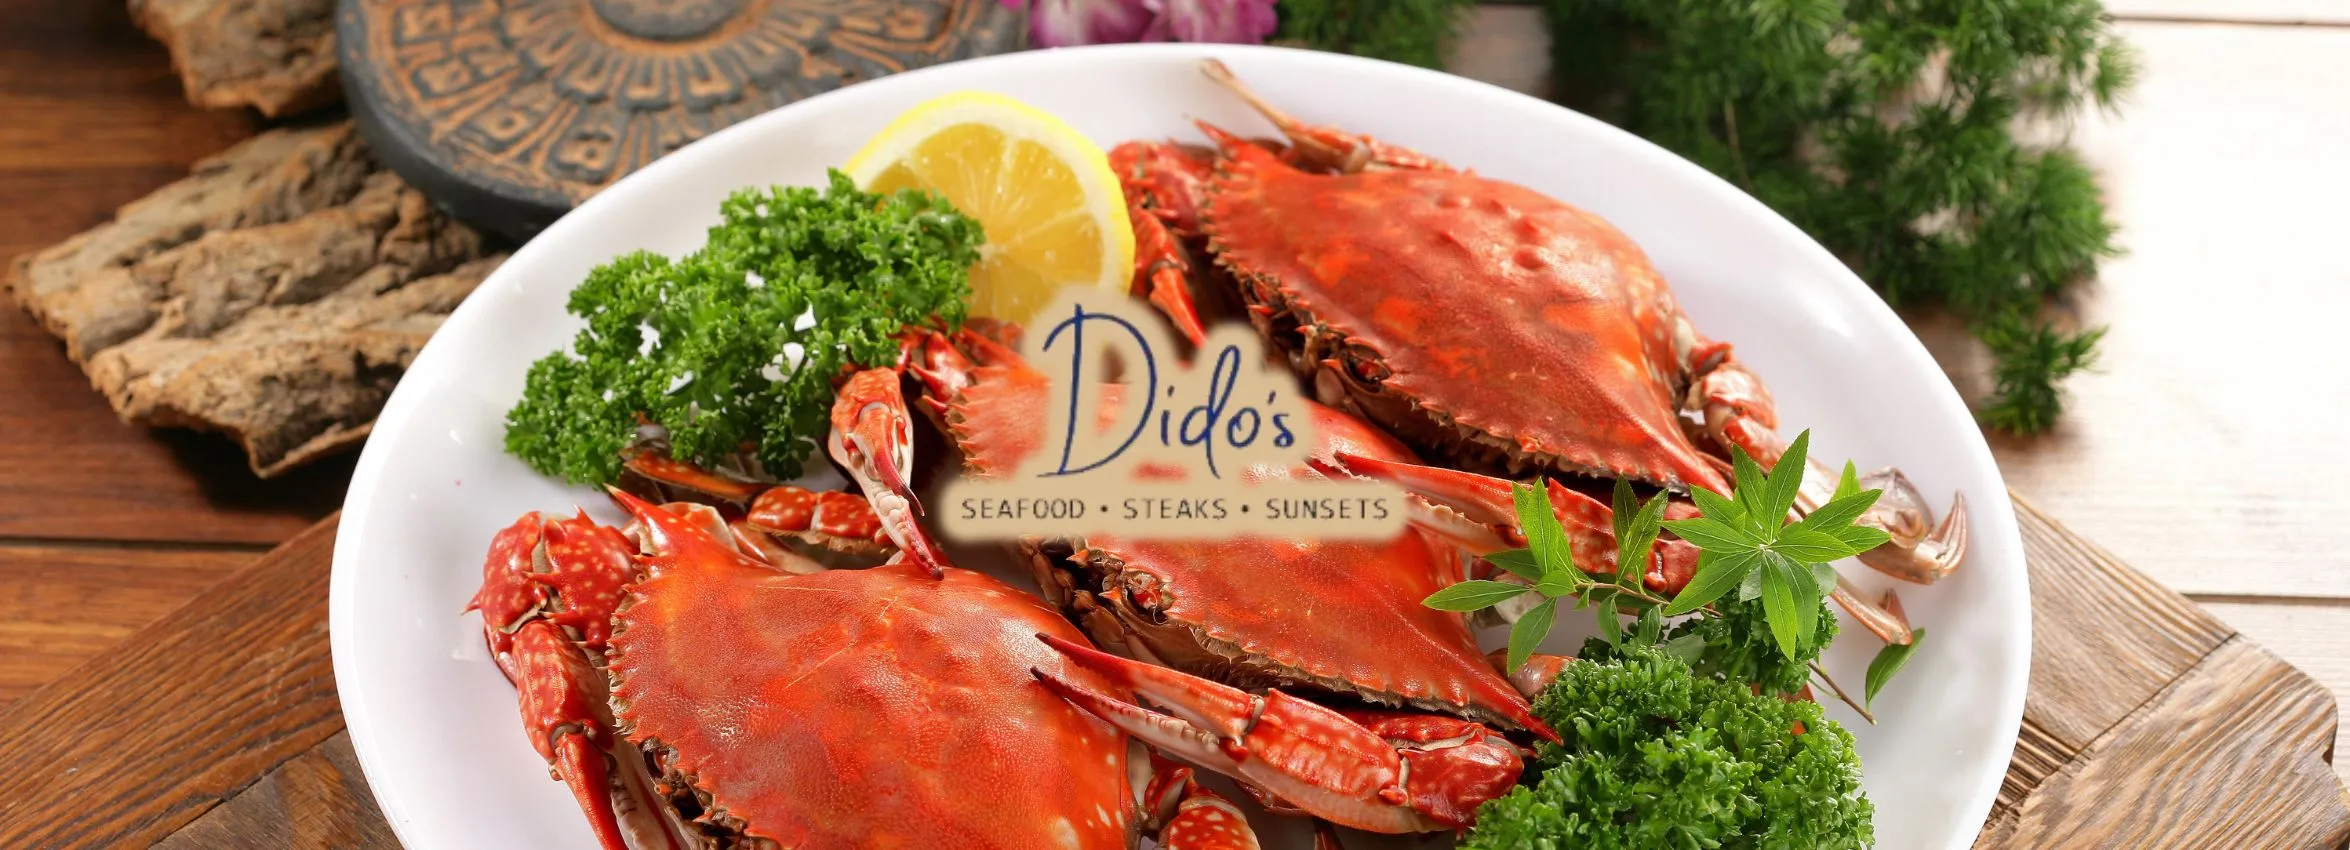 Dido_s-Seafood-and-Steak_Desktop_ET